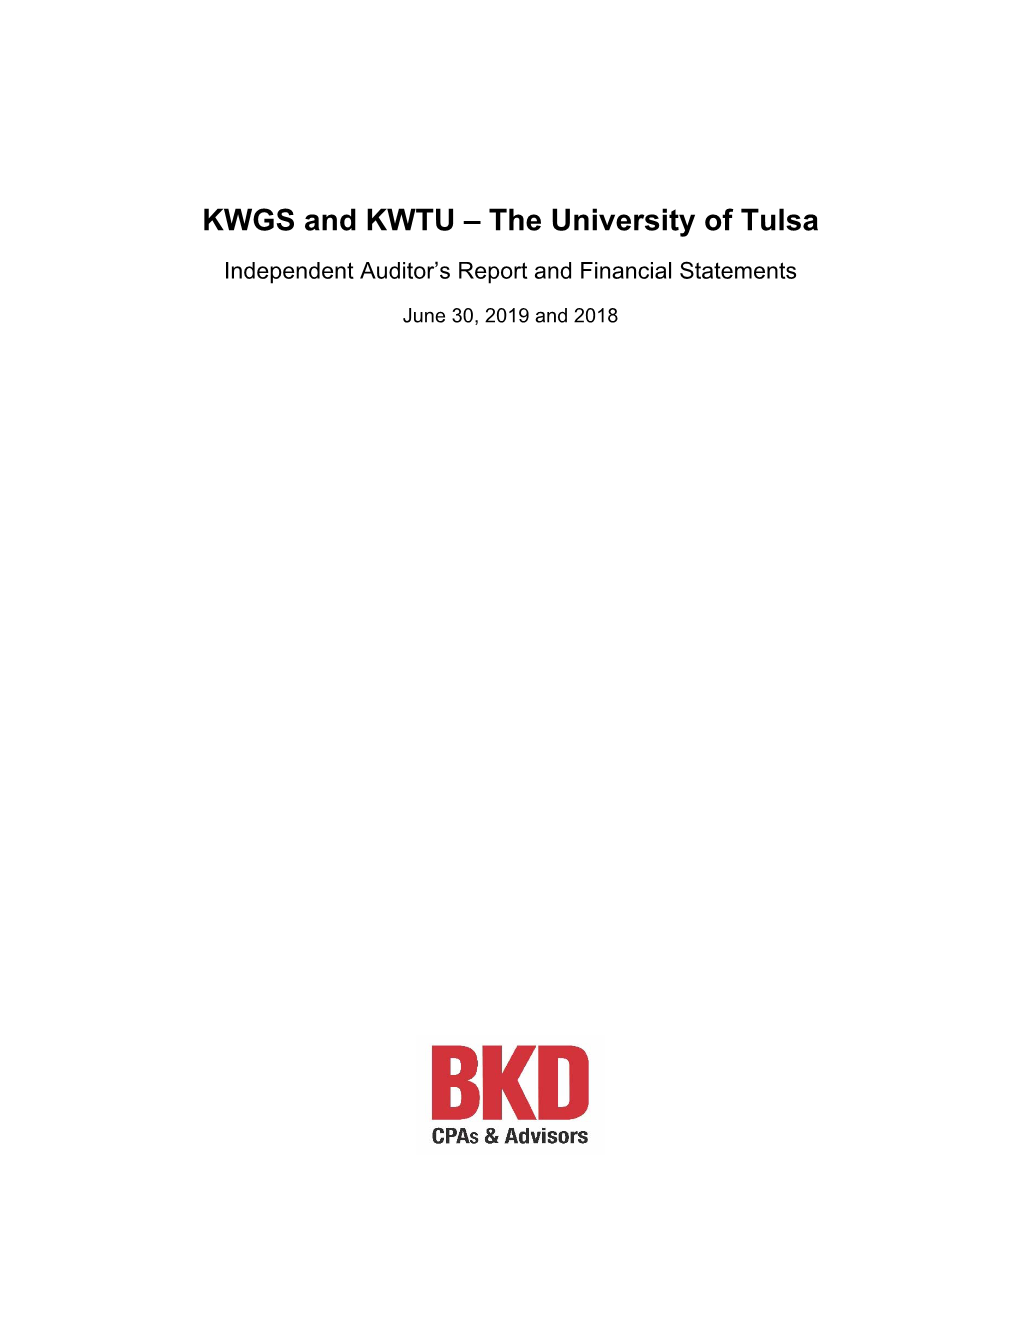 KWGS and KWTU – the University of Tulsa